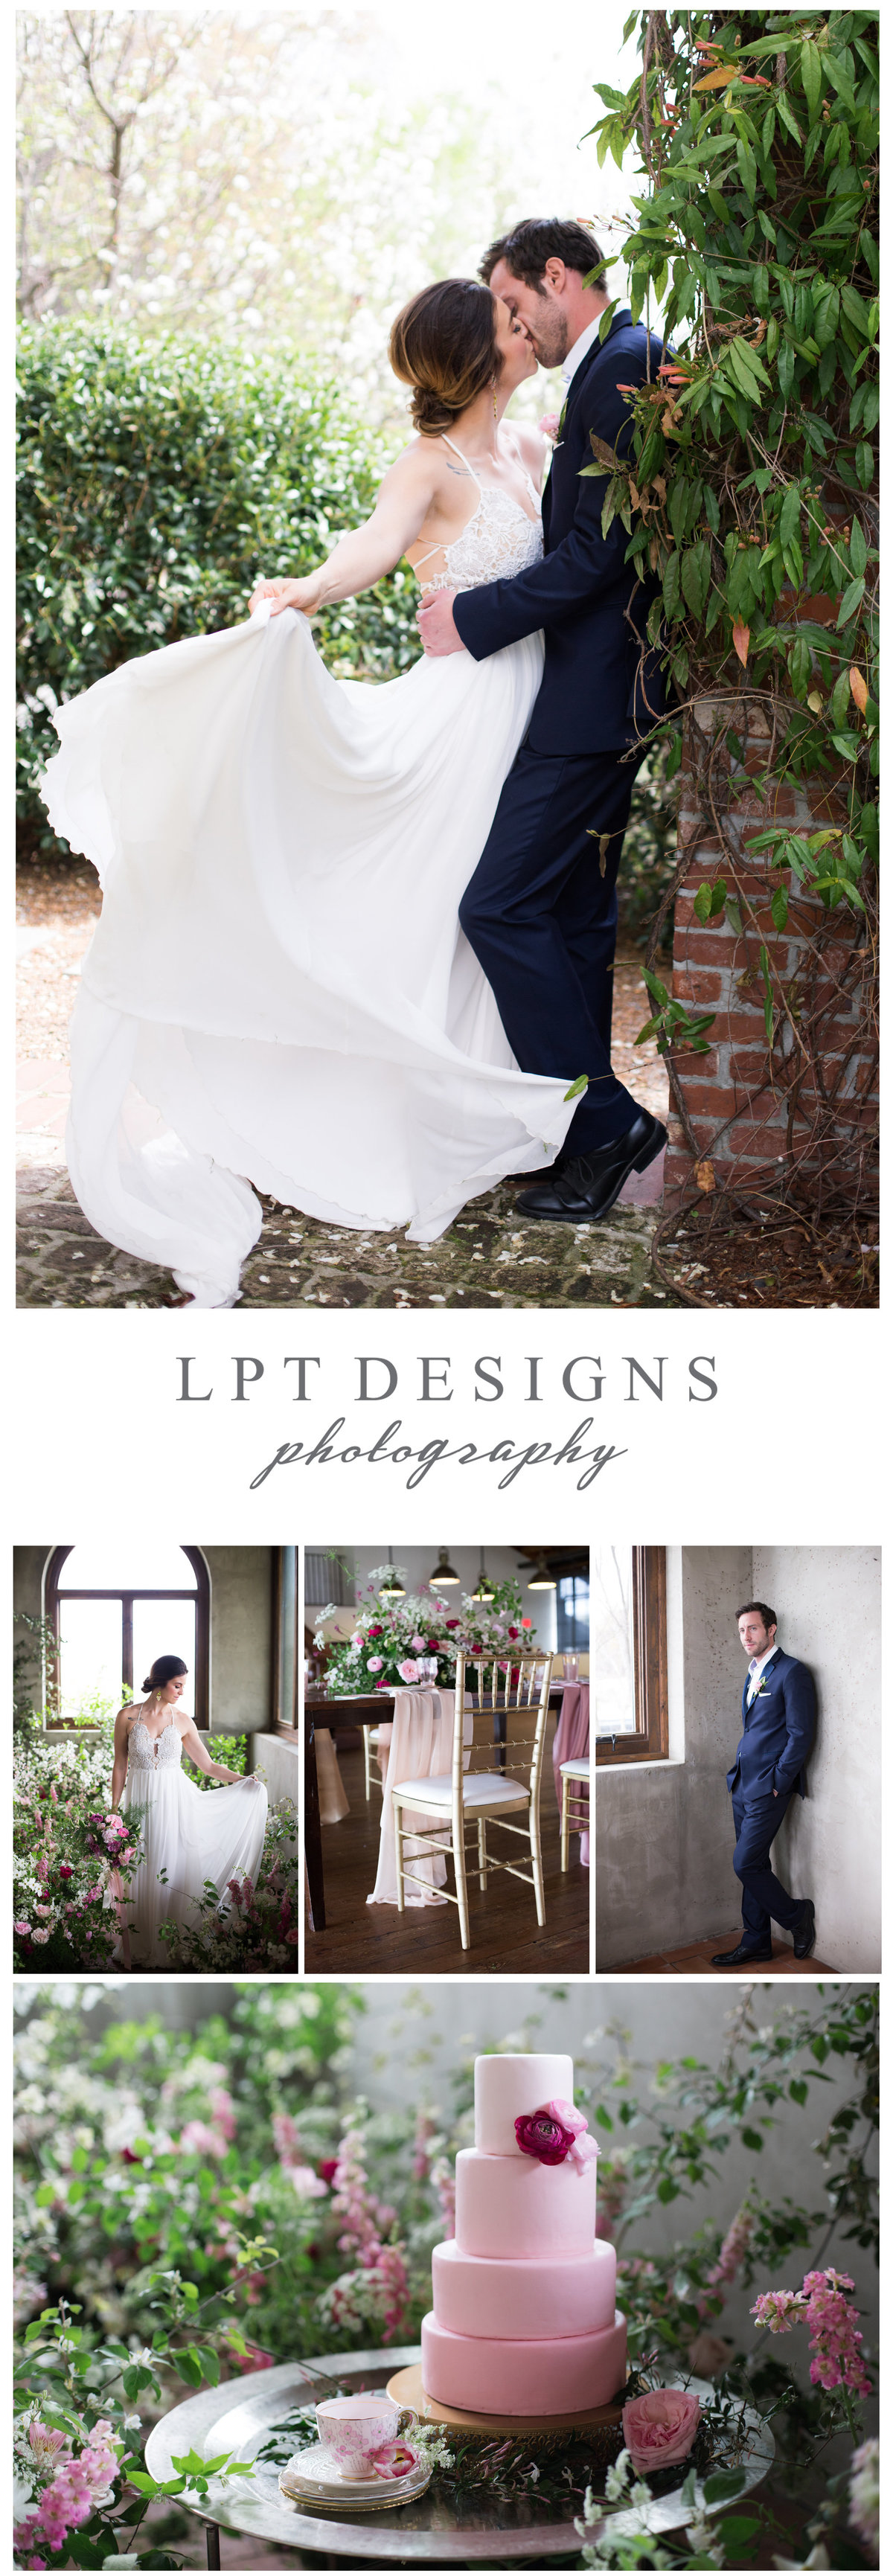 LPT Designs Photography Lydia Thrift Gadsden Alabama Fine Art Wedding Photographer SS1